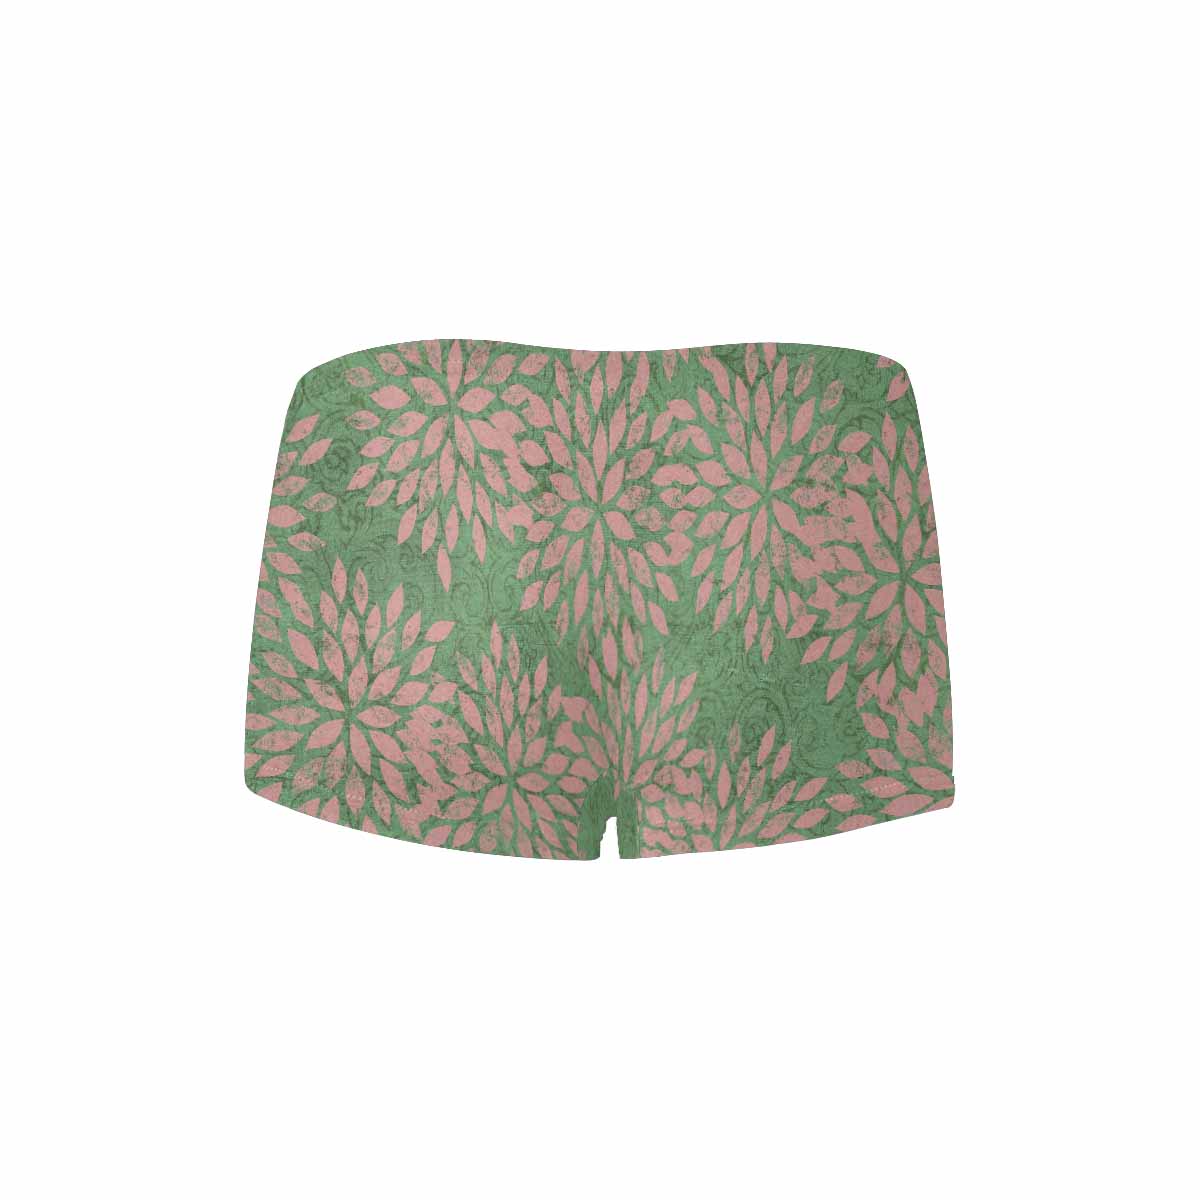 Floral 2, boyshorts, daisy dukes, pum pum shorts, panties, design 55